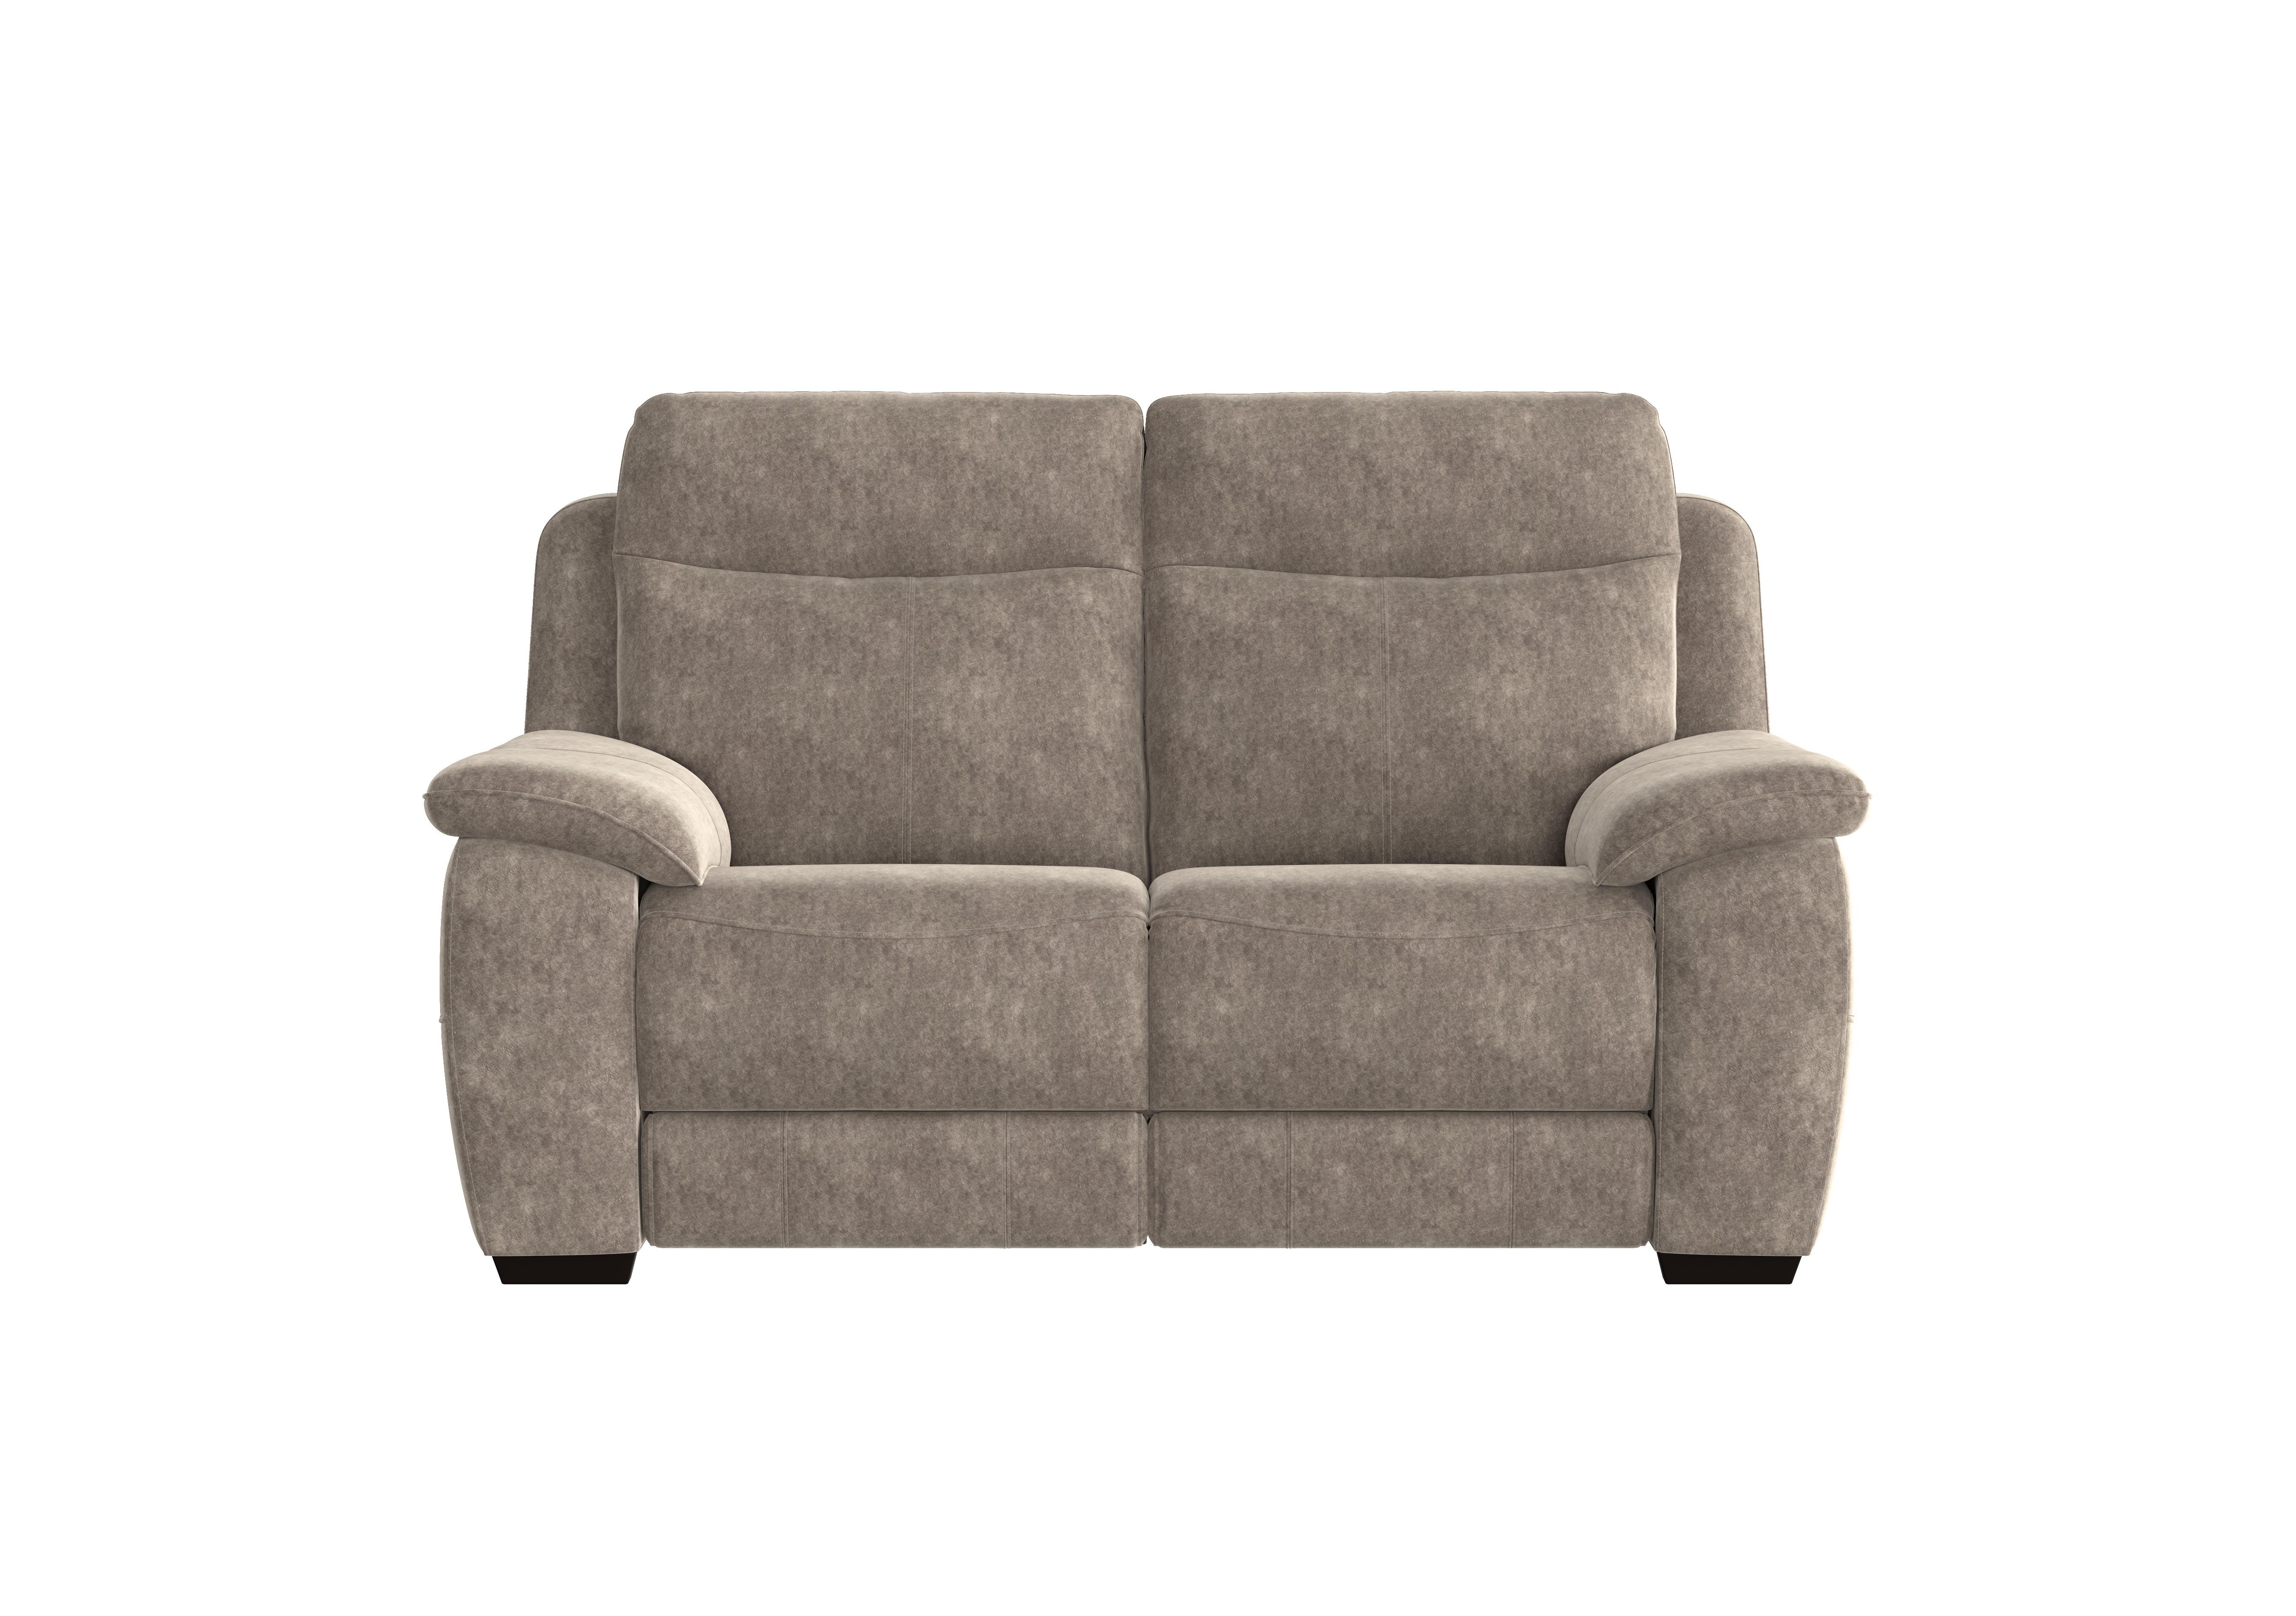 Starlight Express 2 Seater Fabric Recliner Sofa with Power Headrests in Bfa-Bnn-R29 Fv1 Mink on Furniture Village